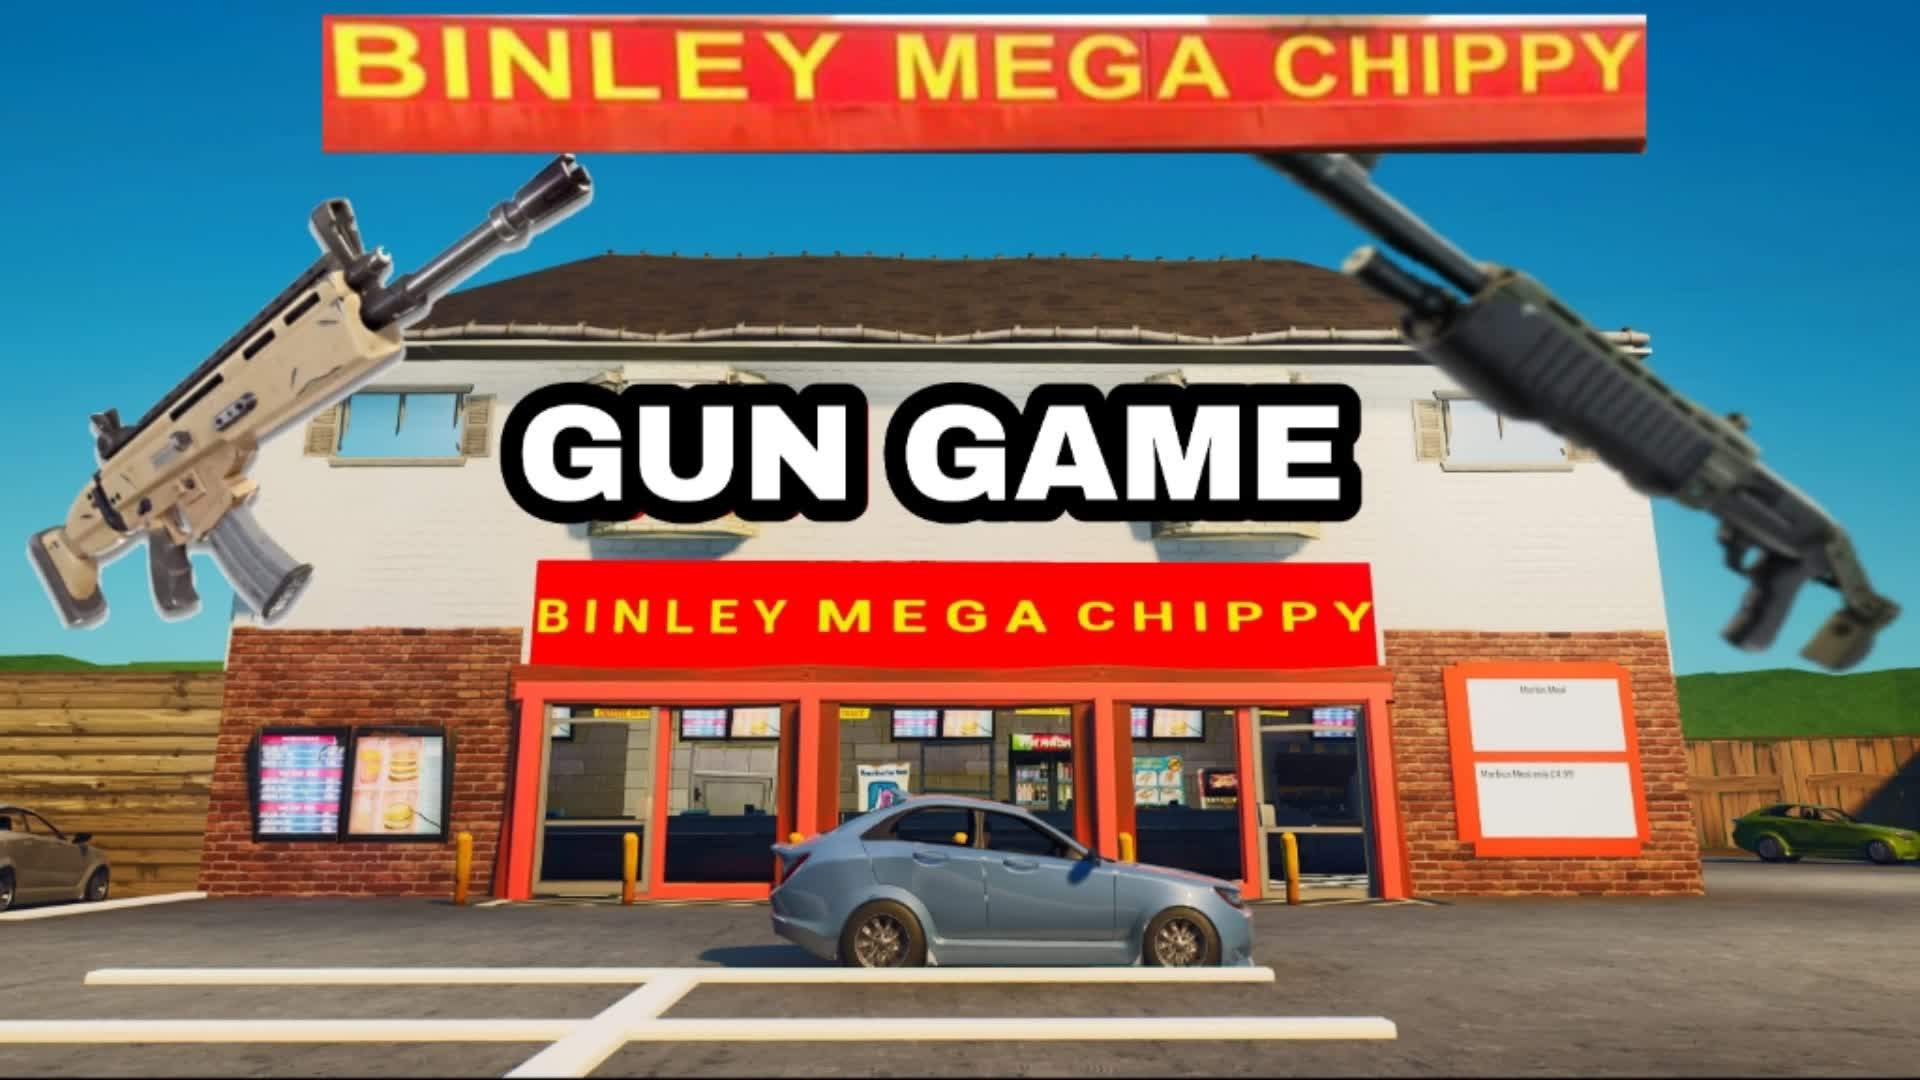 BINLEY MEGA CHIPPY [GUN GAME]